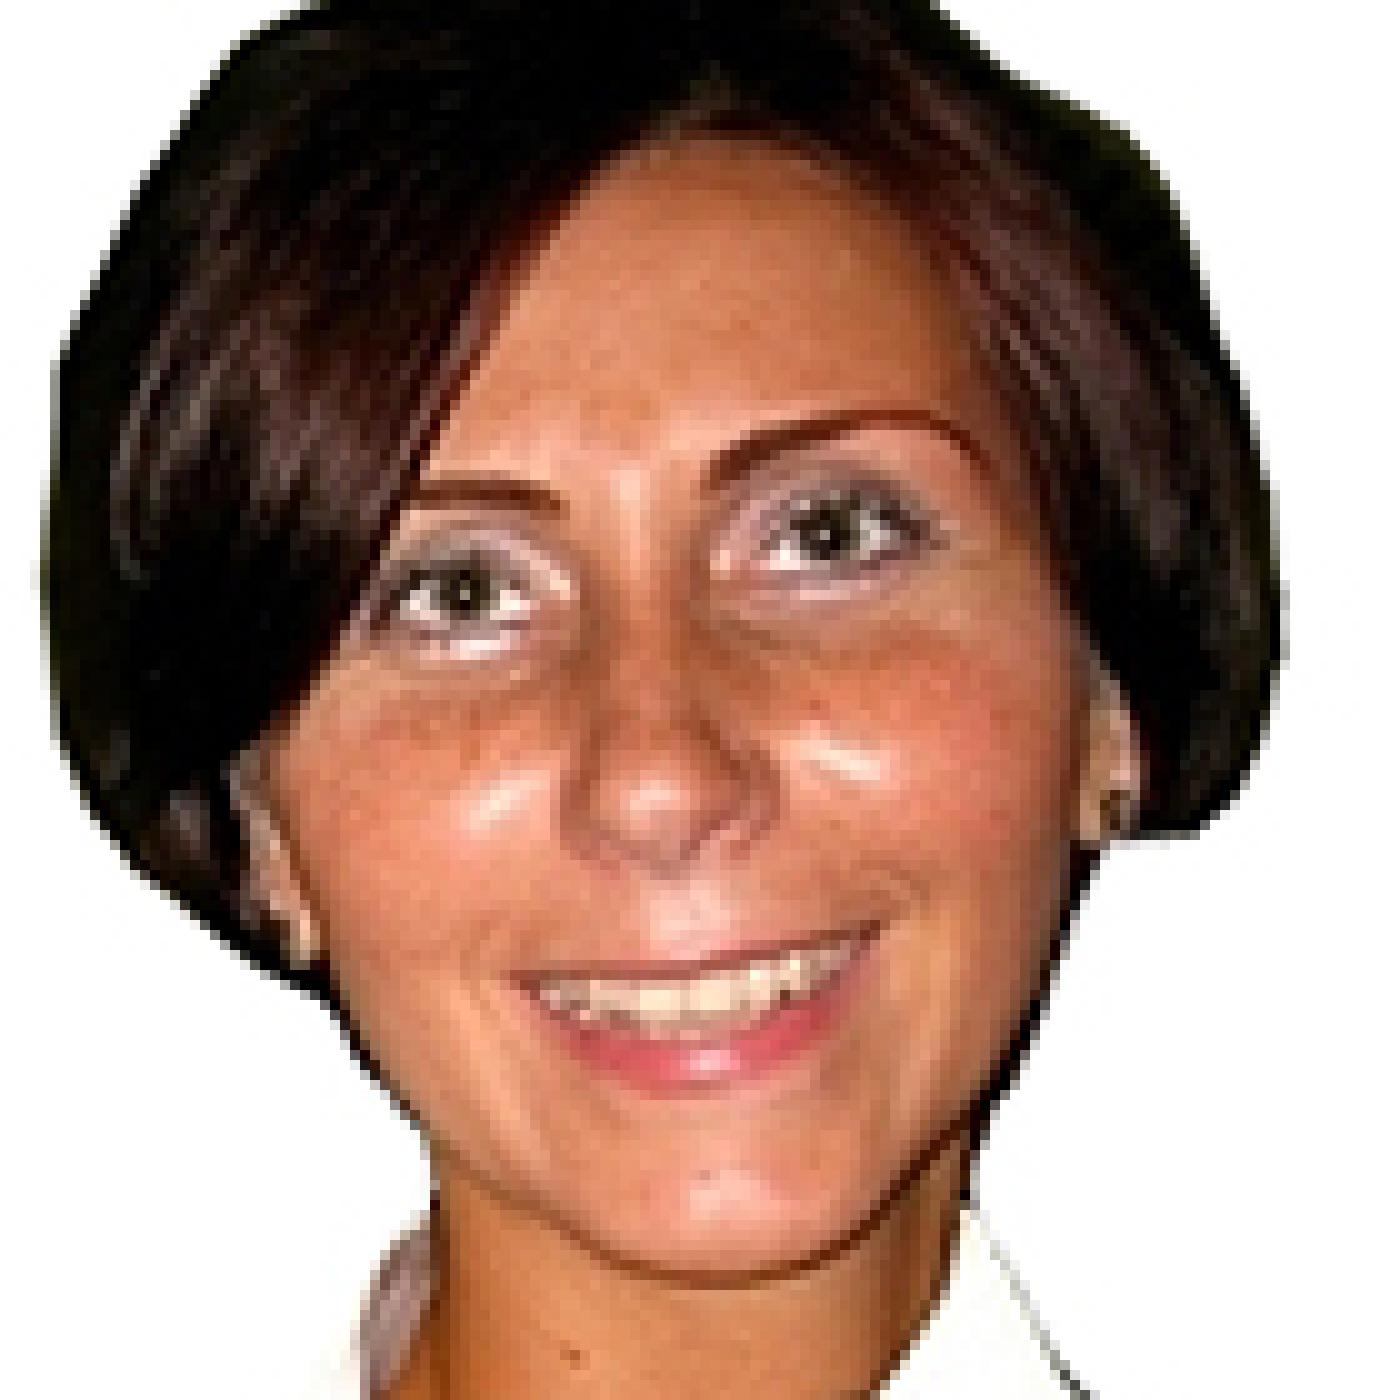 IFES staff Ioana Cosma